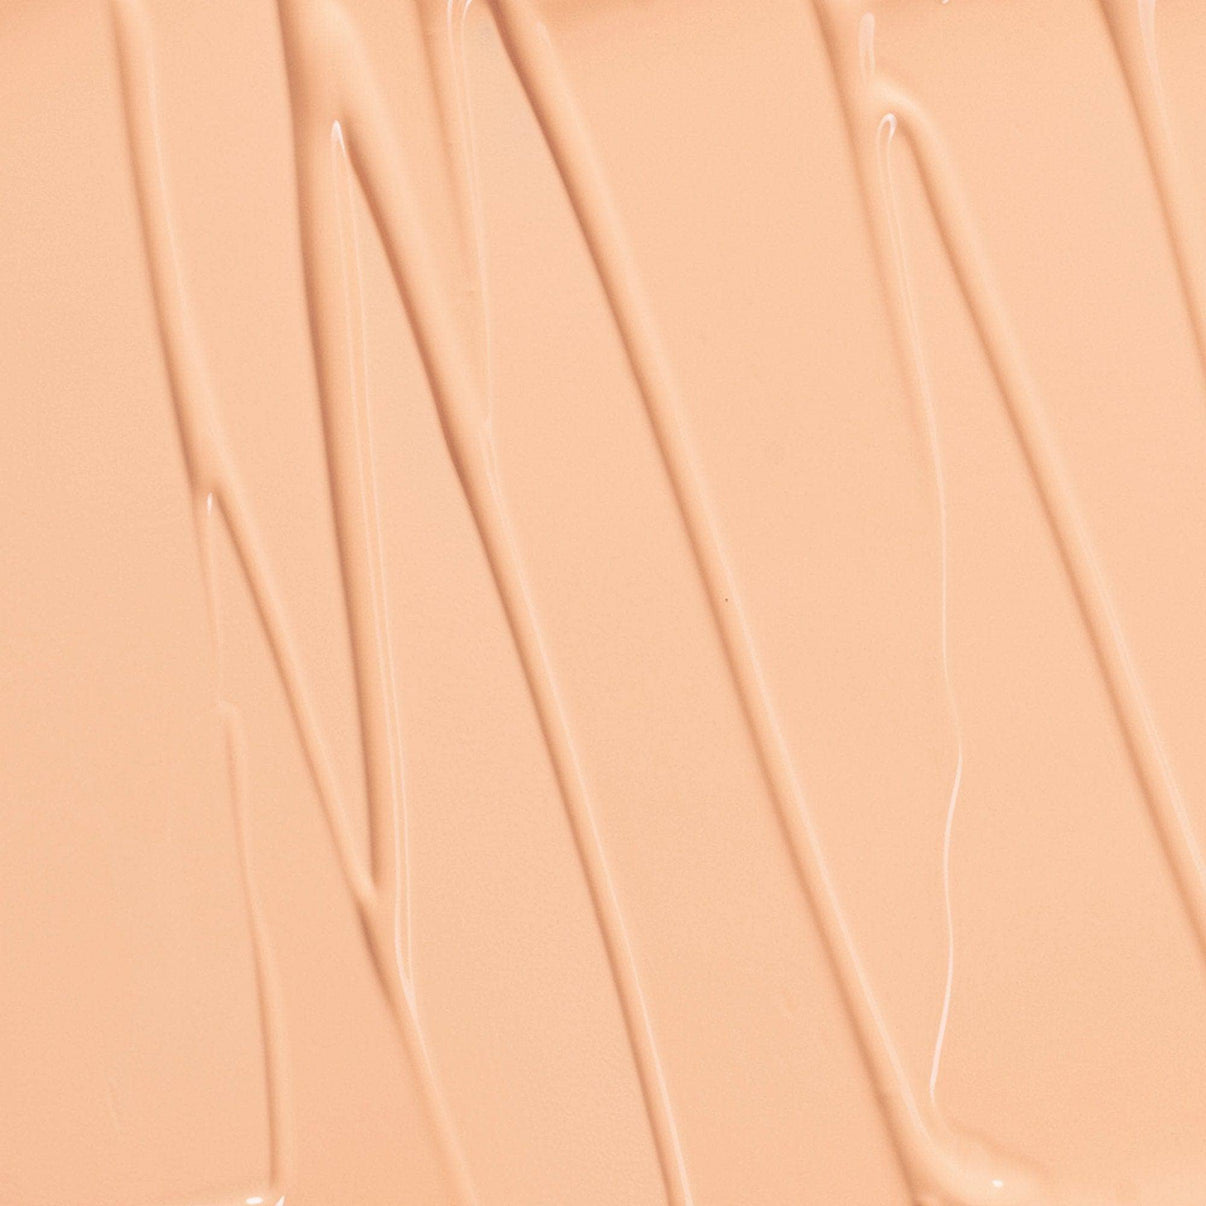 Nudefix cream concealer in shade nude 4 texture swatch